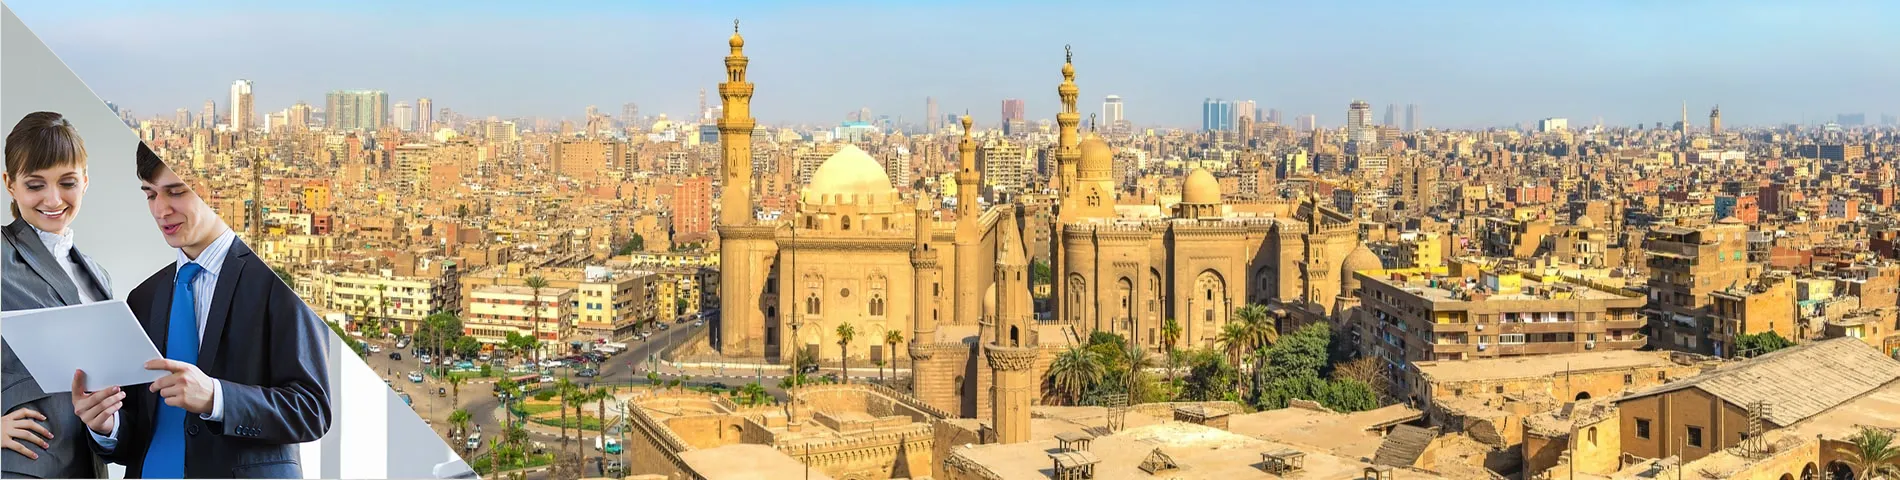 Káhira - Biznis - individuálne